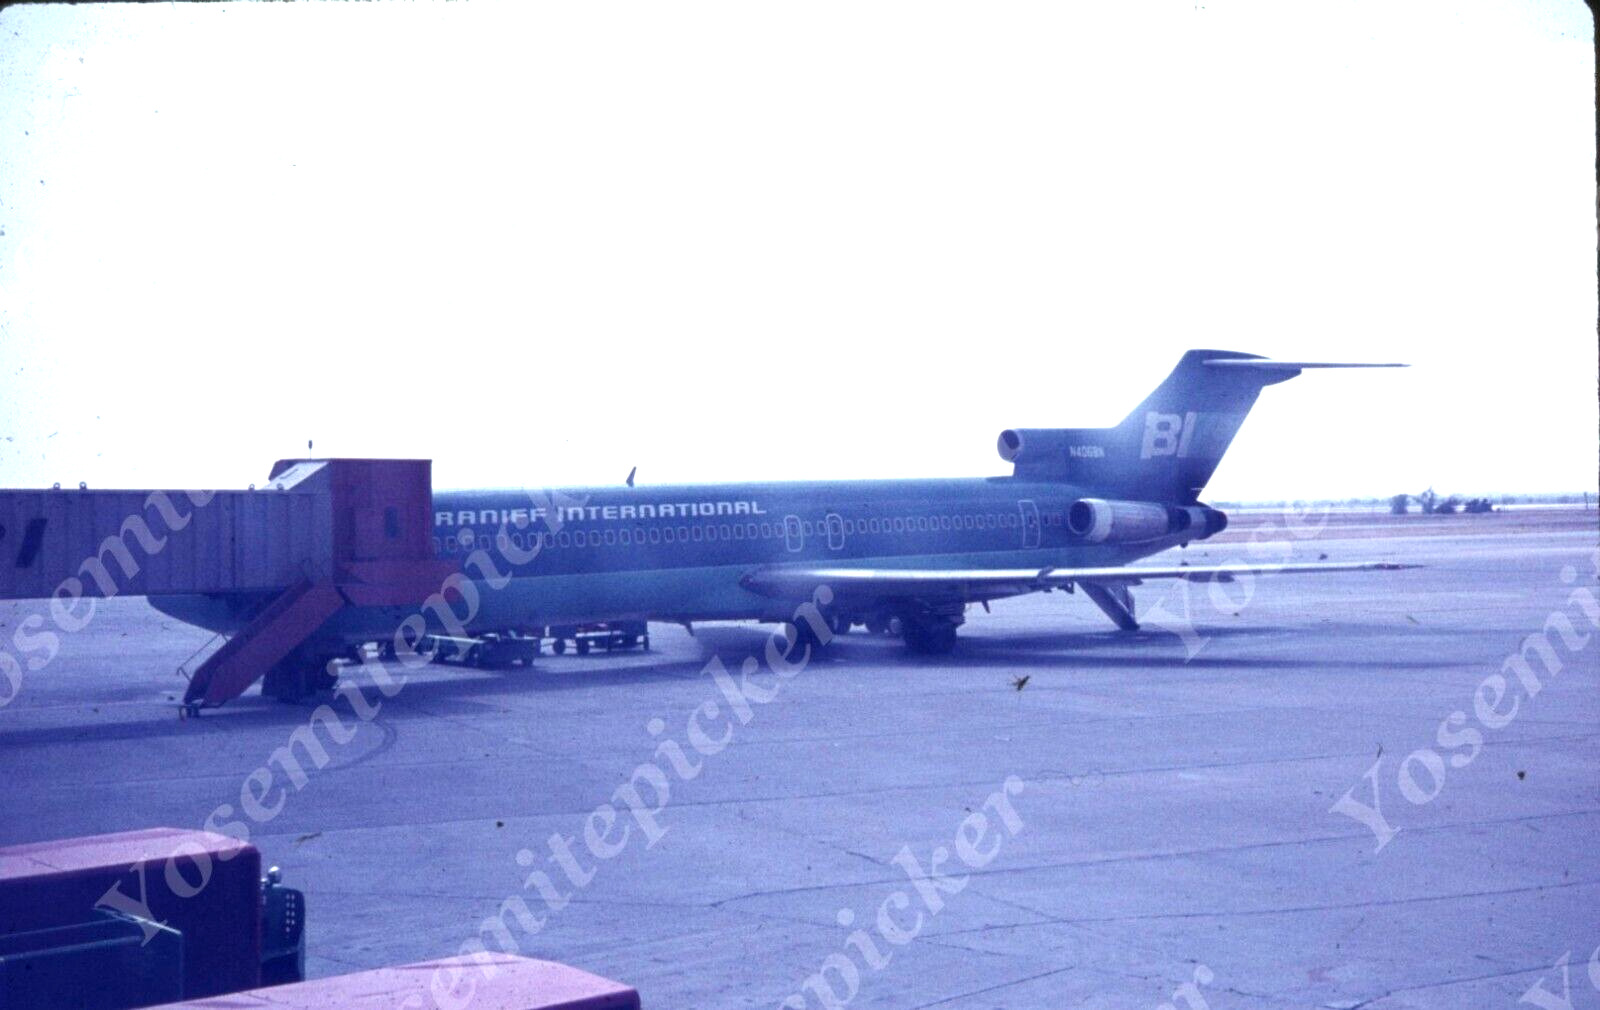 sl49  Original Slide  1972 Braniff International Airlines Airplane 301a